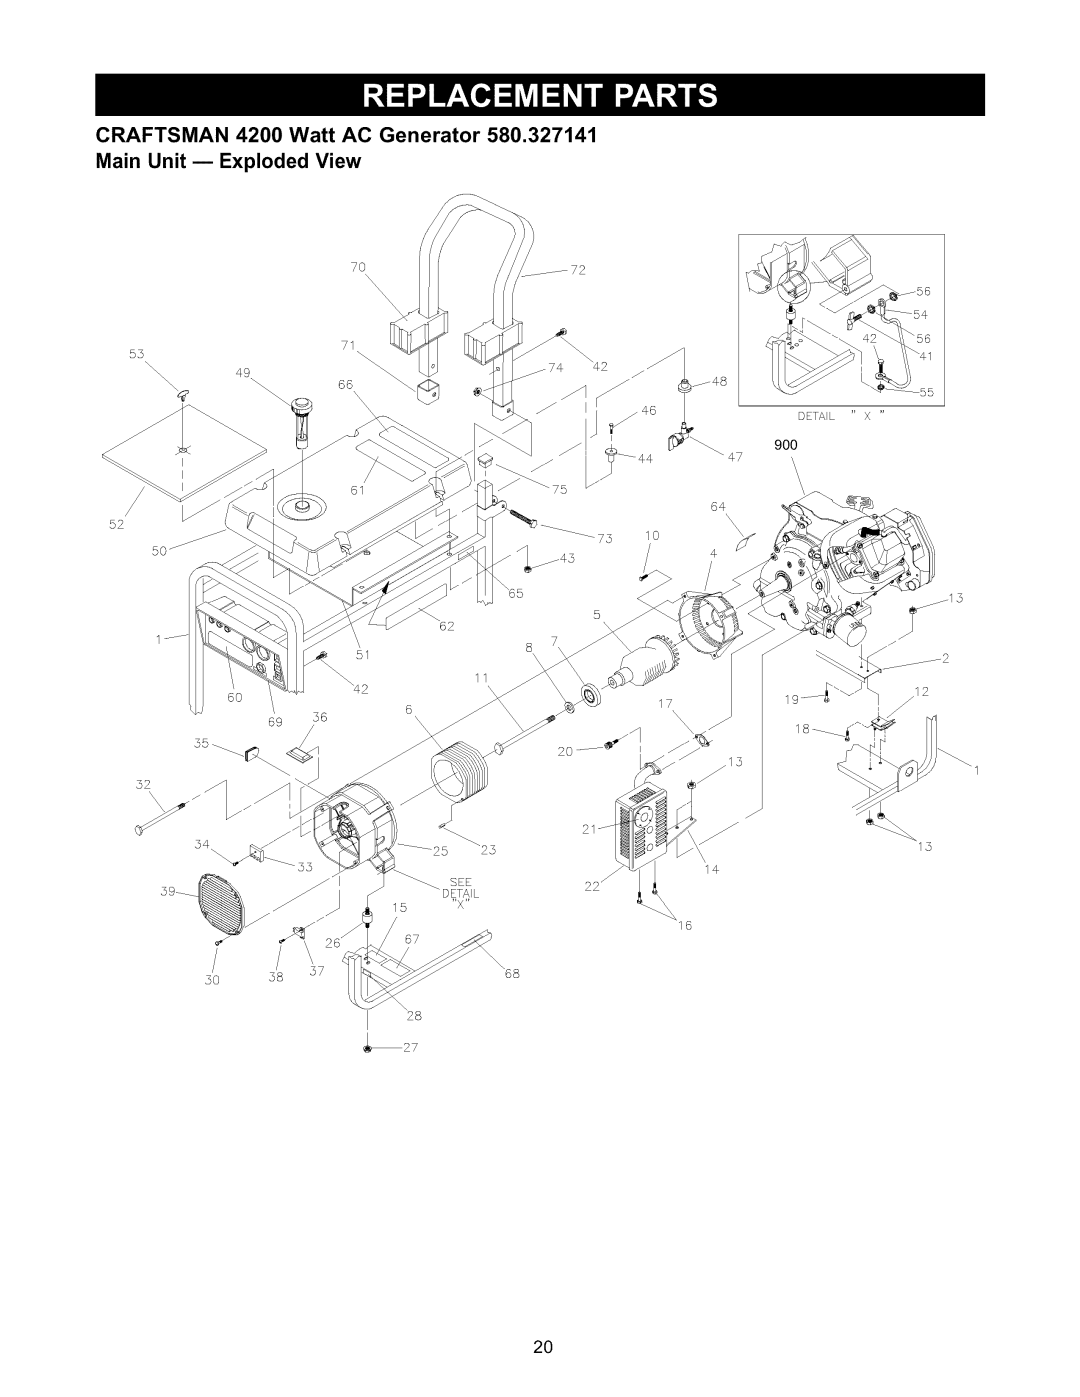 Craftsman 580.327141 owner manual CRAFTSMAN 4200 Watt AC Generator, Main Unit m Exploded View, I //I 